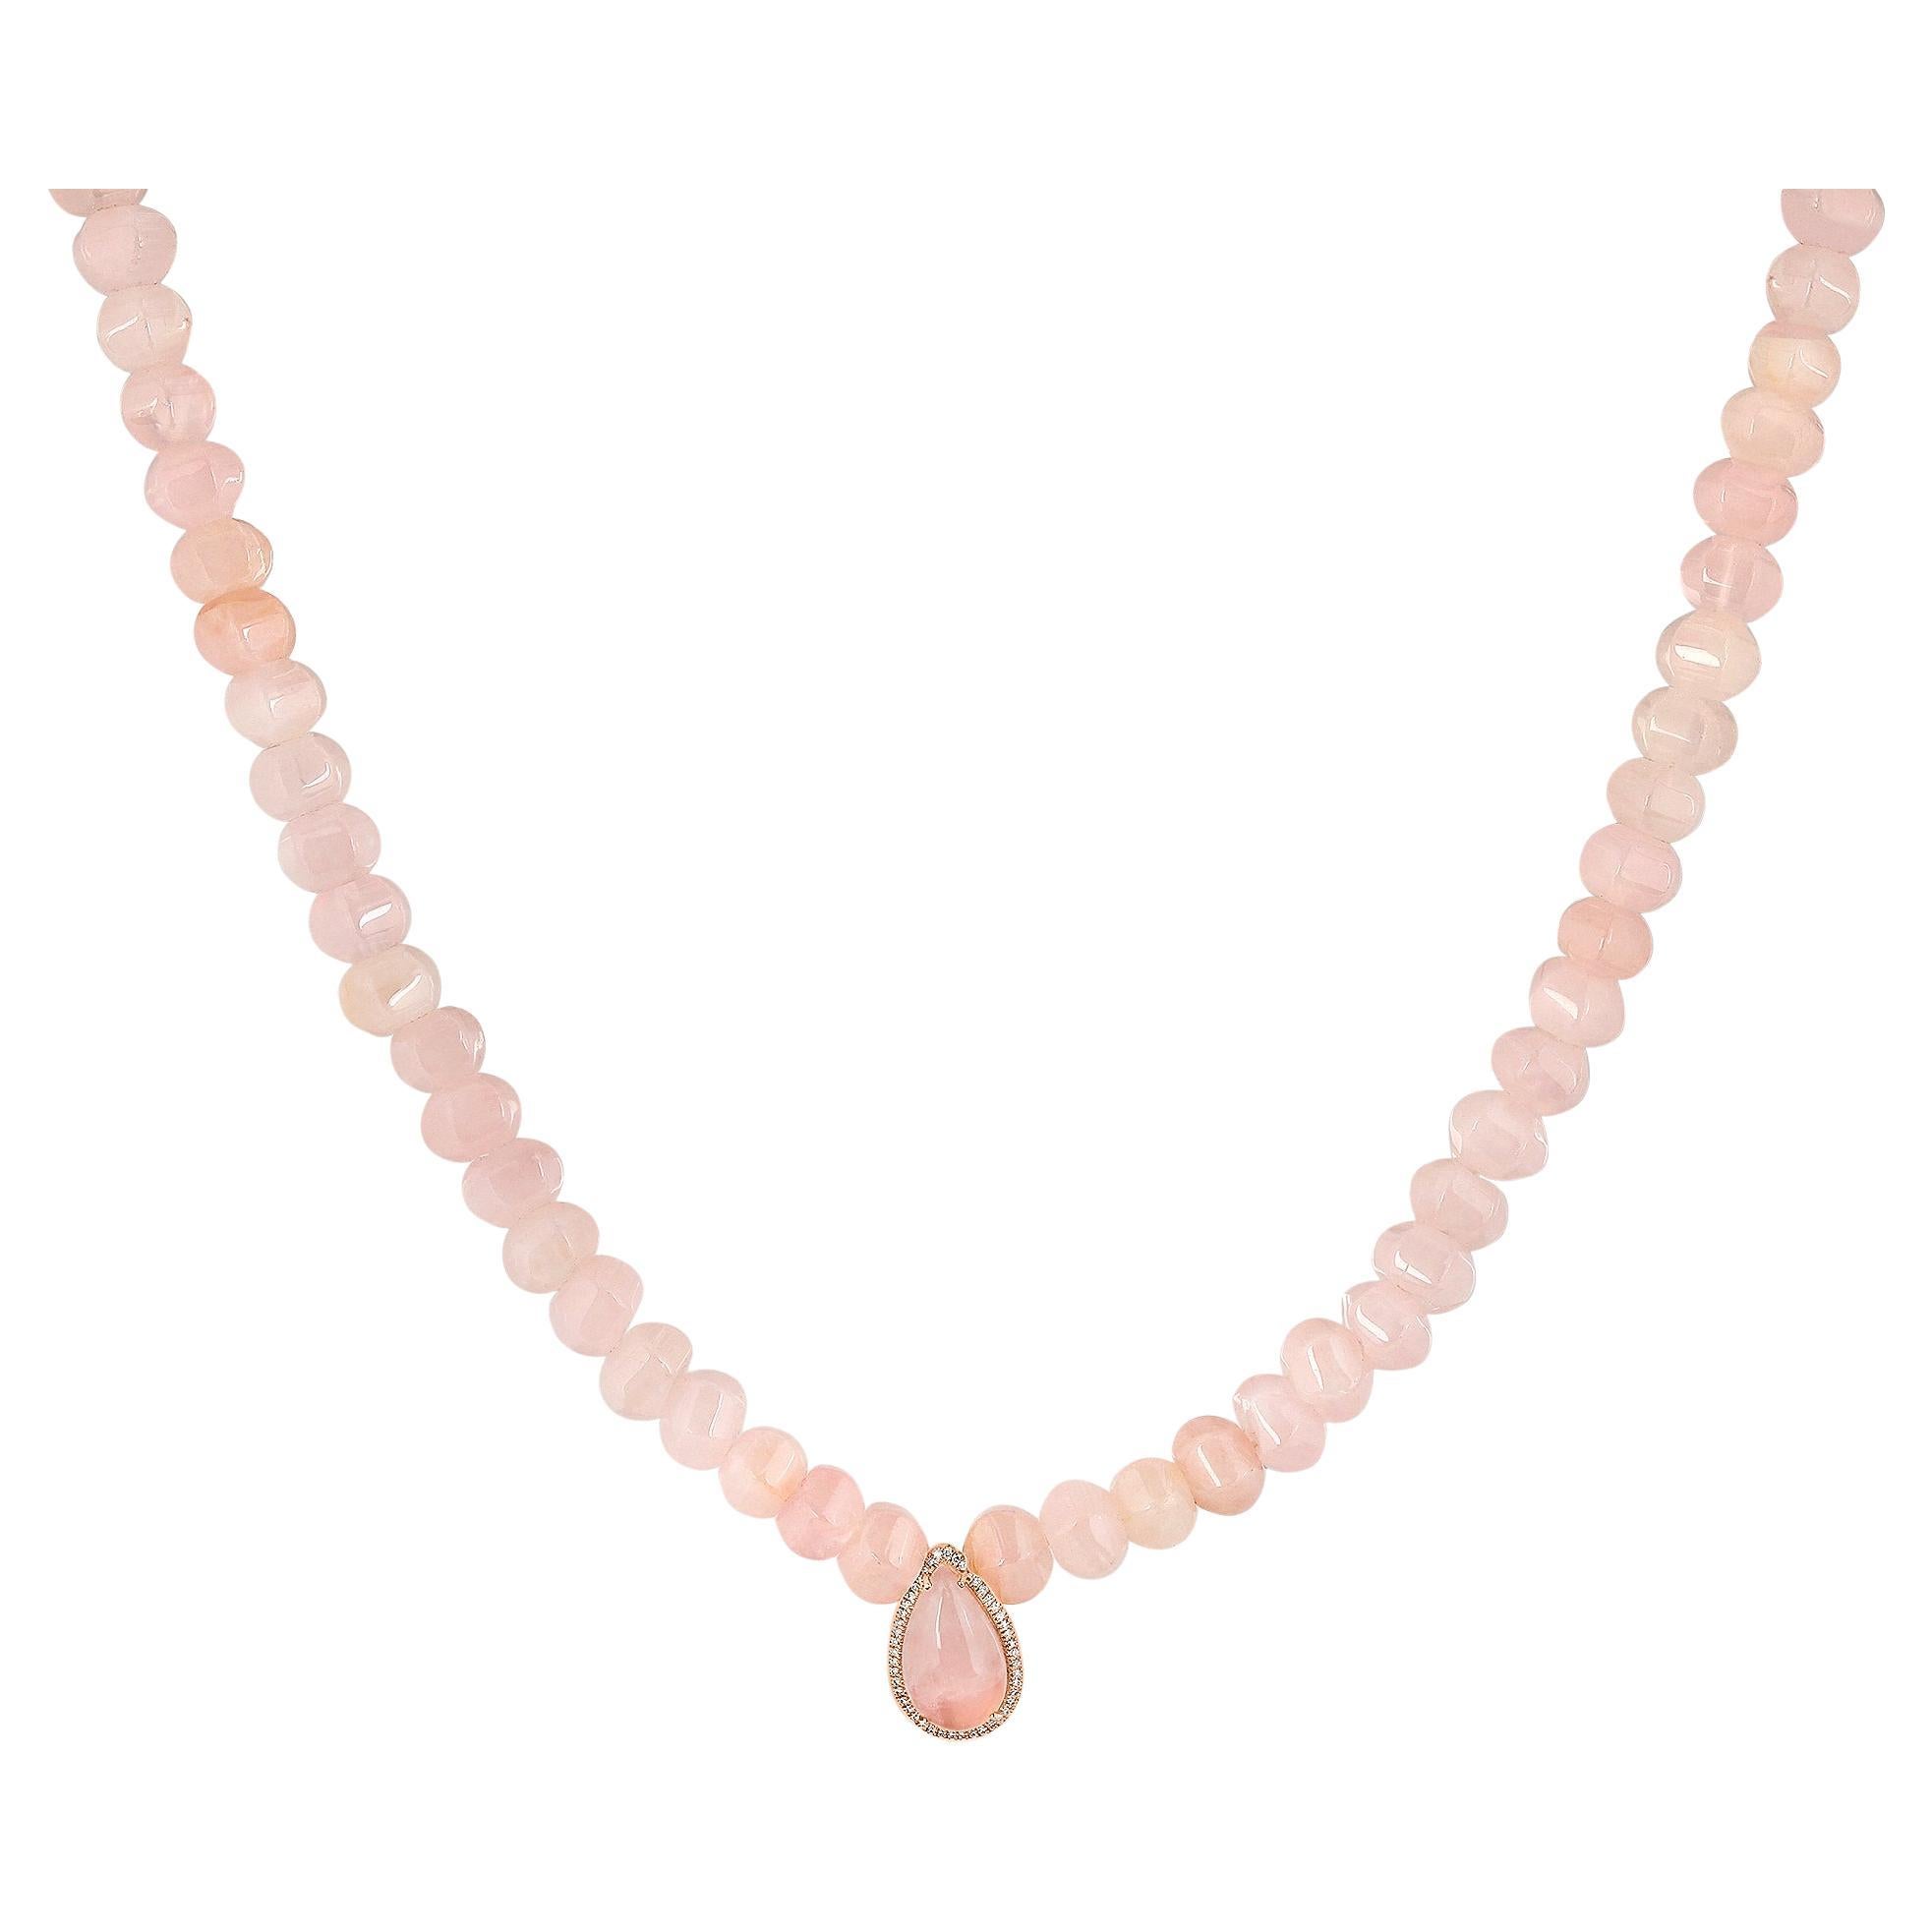 6.97 Carat Rose Quartz And Diamonds Necklace For Sale